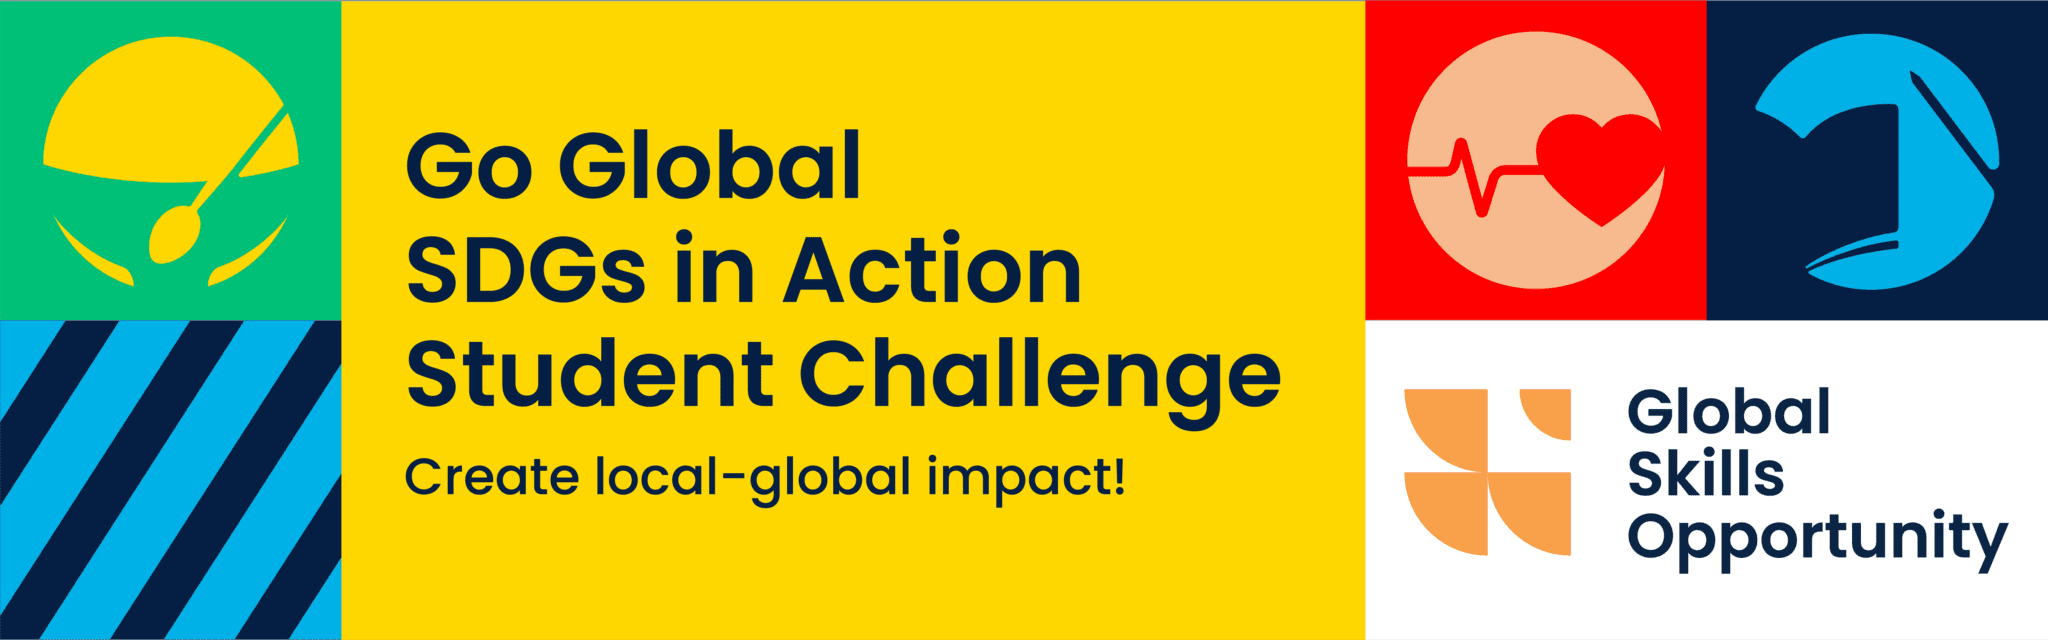 Go Global SDGs in Action Student Challenge